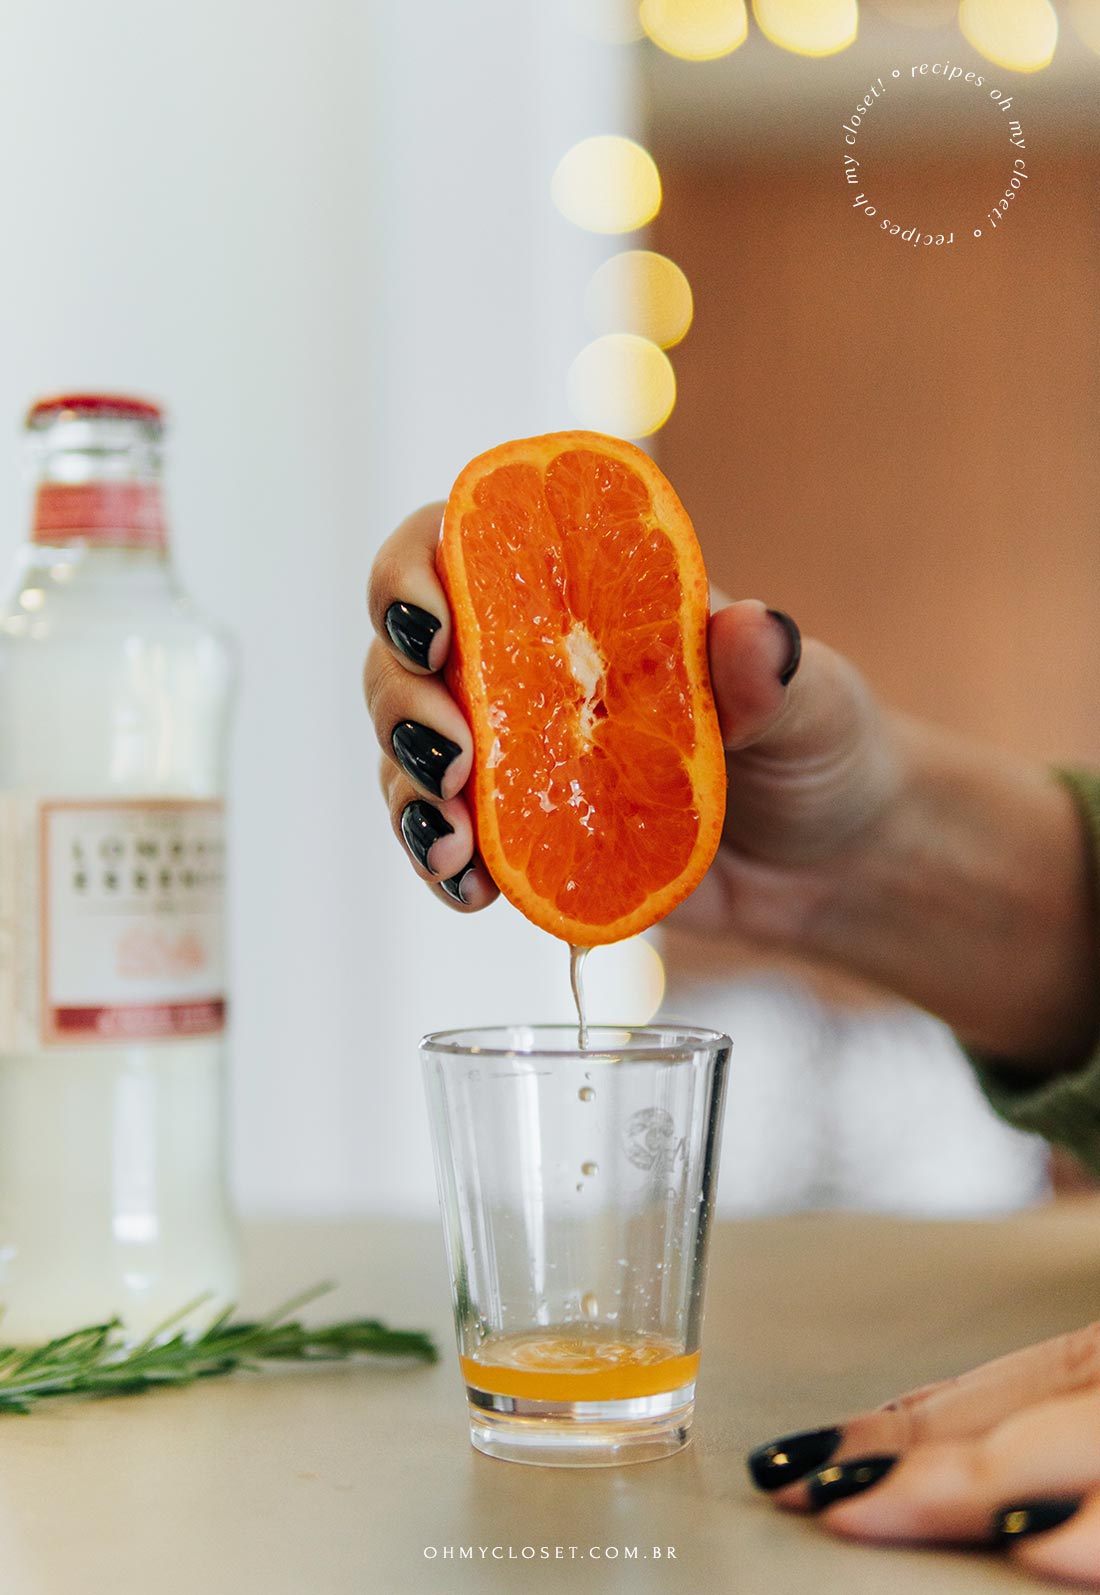 Preparando o drink, espremendo a tangerina.